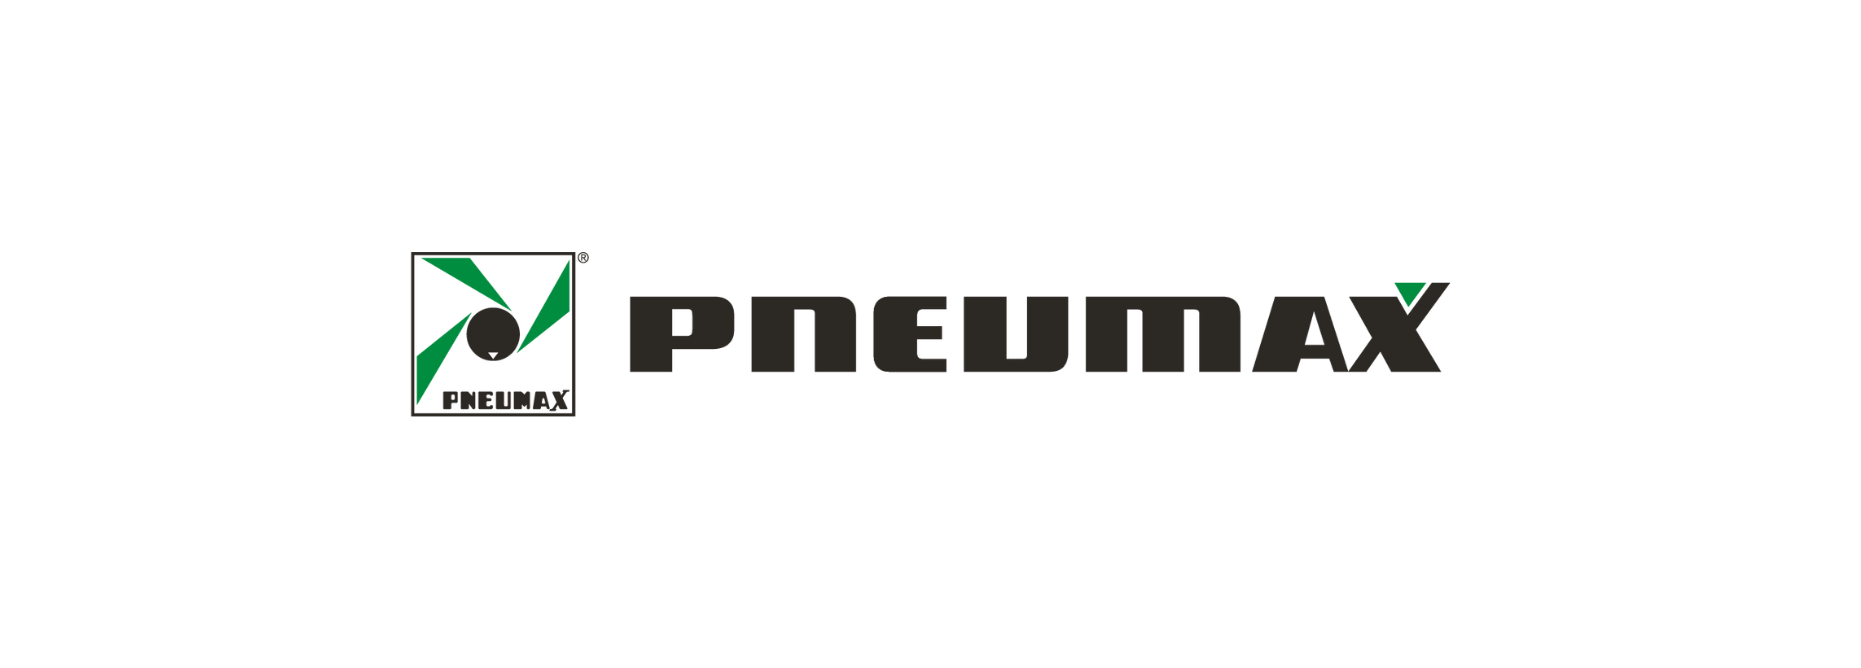 Personalize_Logo Pneumax